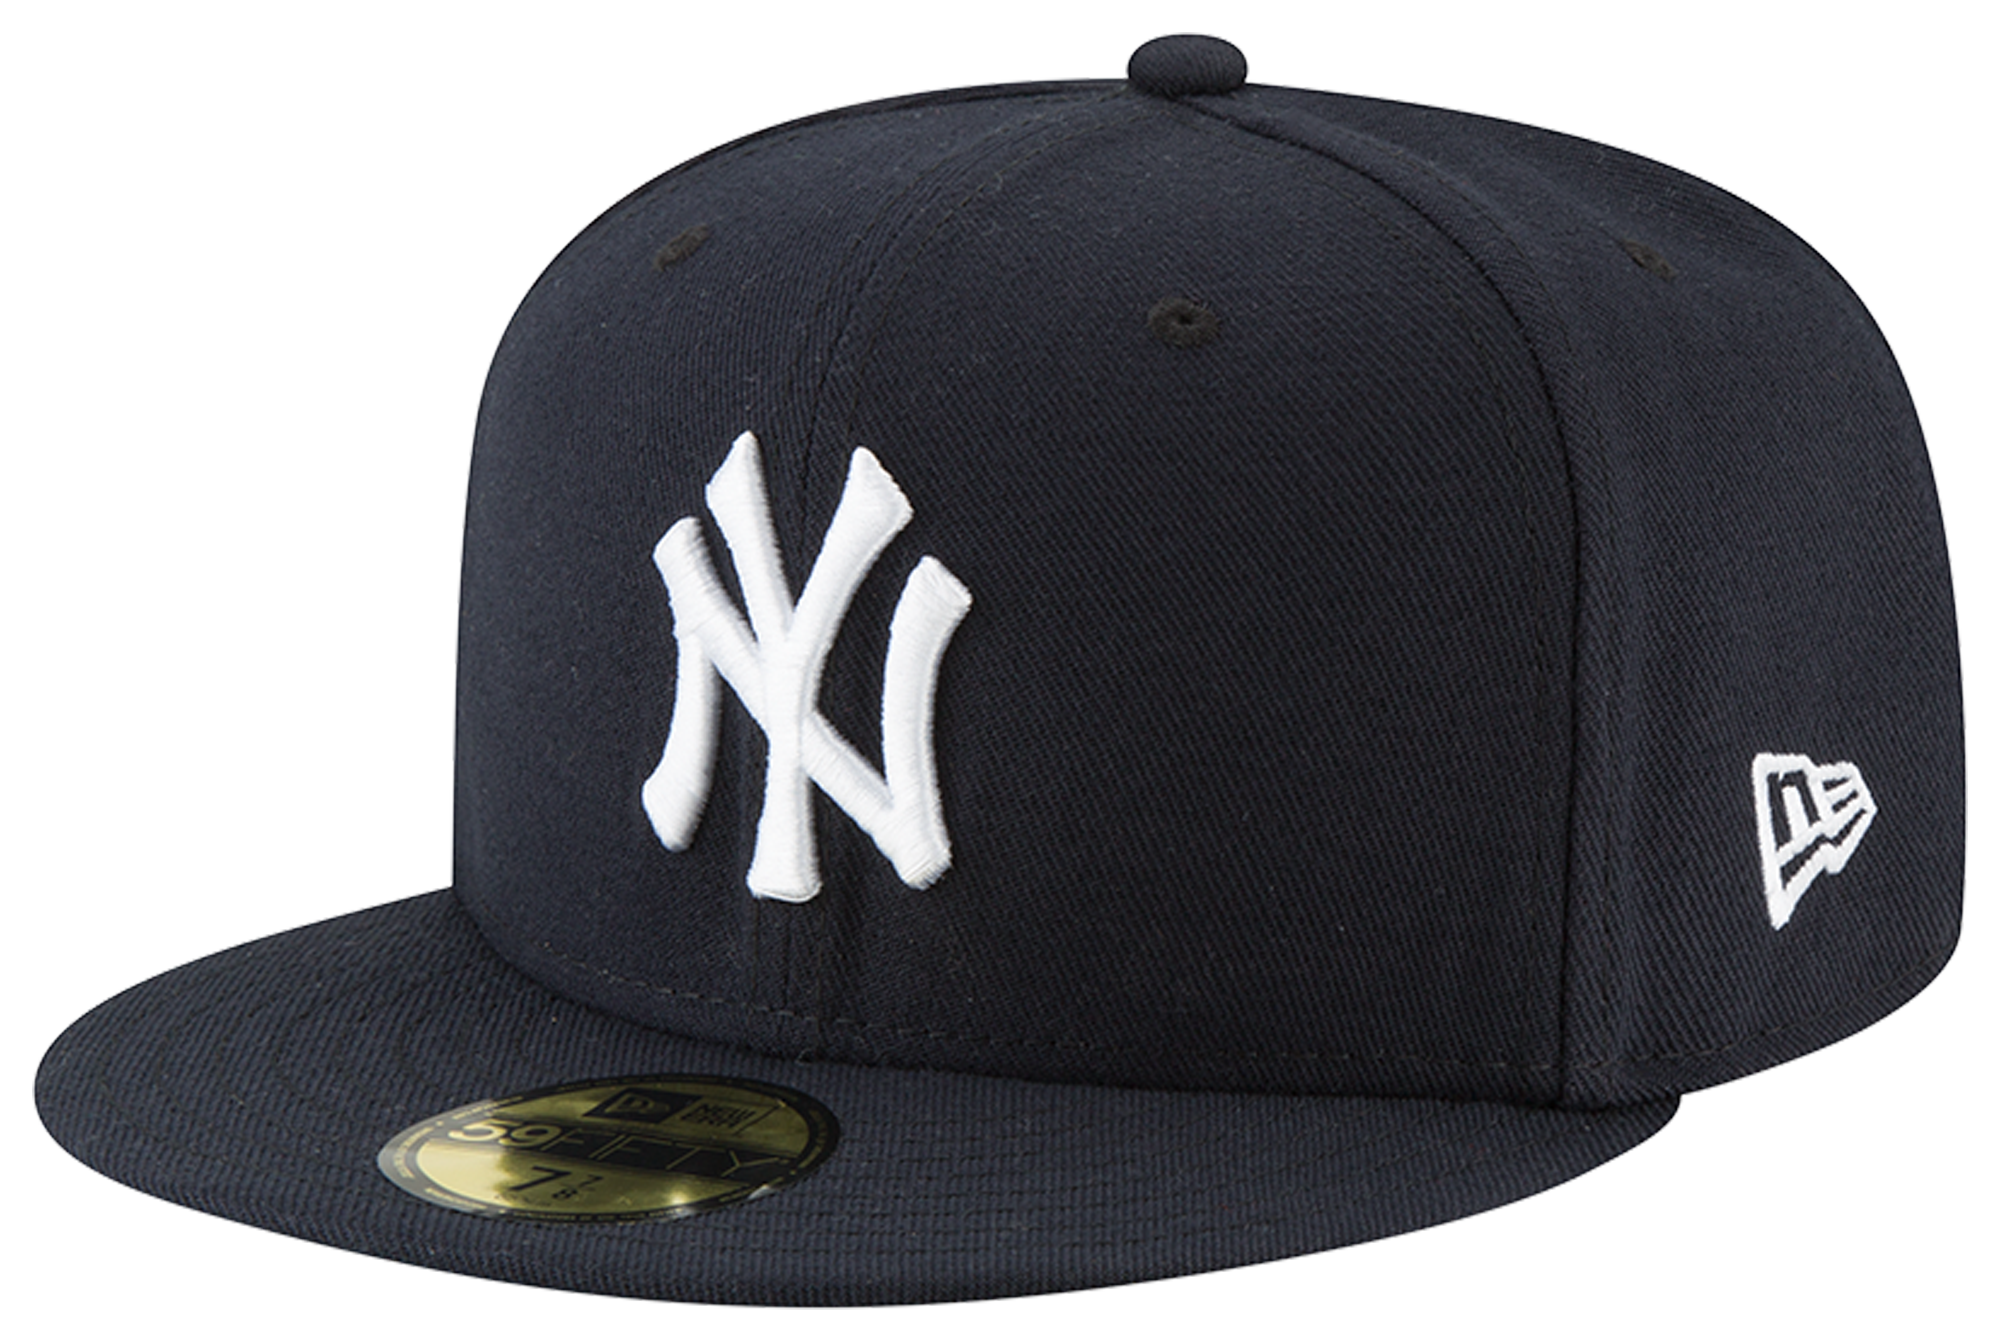 New Era Yankees ACPERF GM 2017 Cap